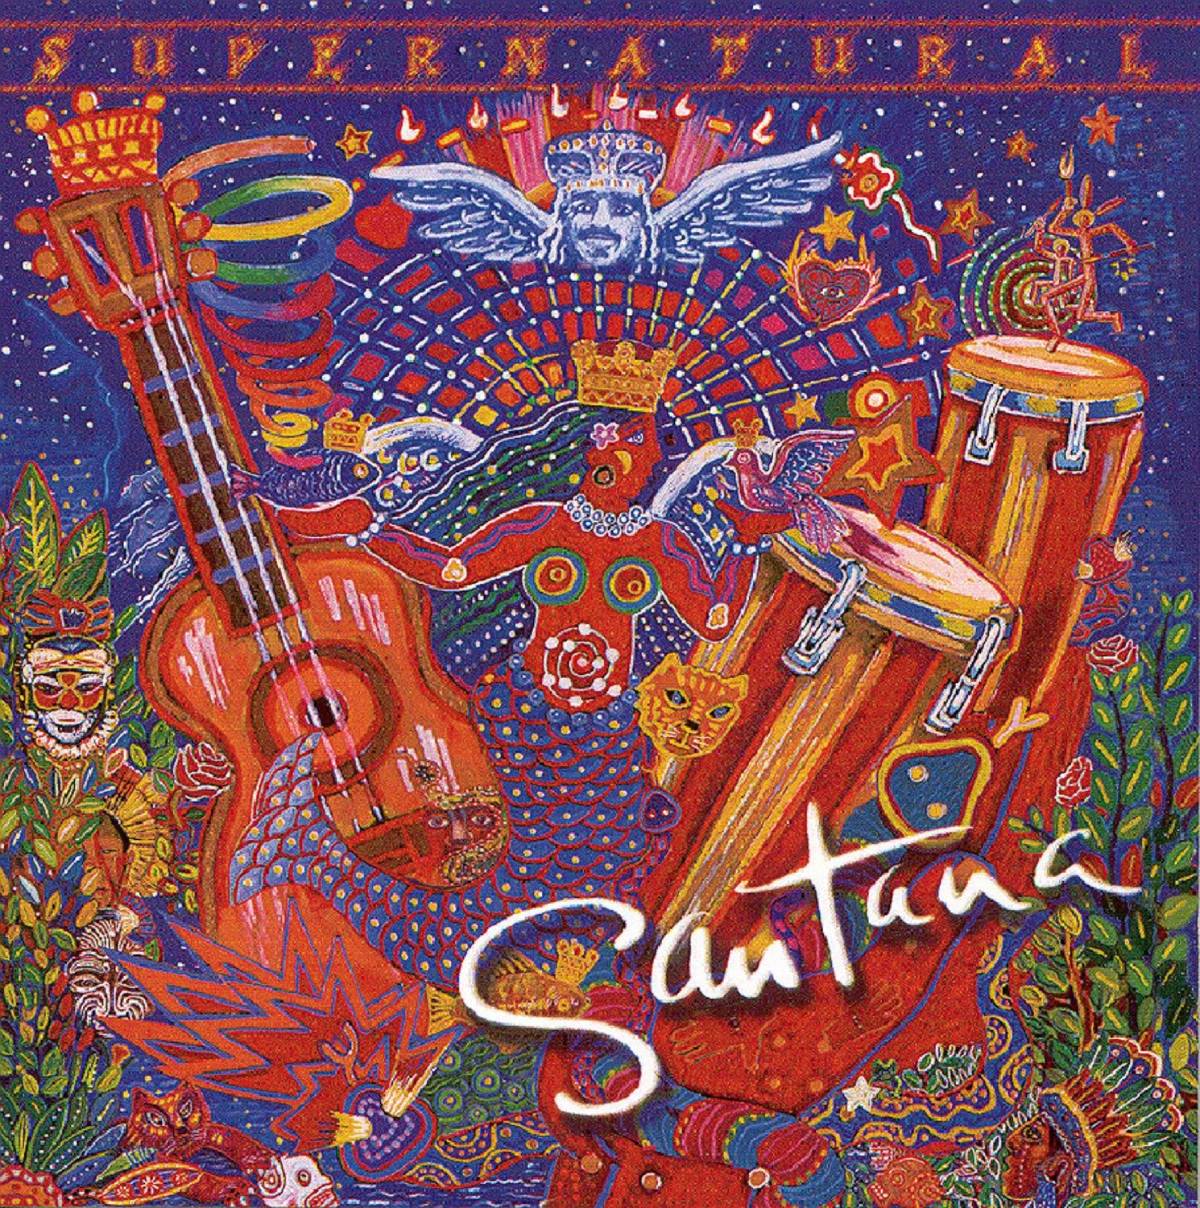 Santana - "Sobrenatural